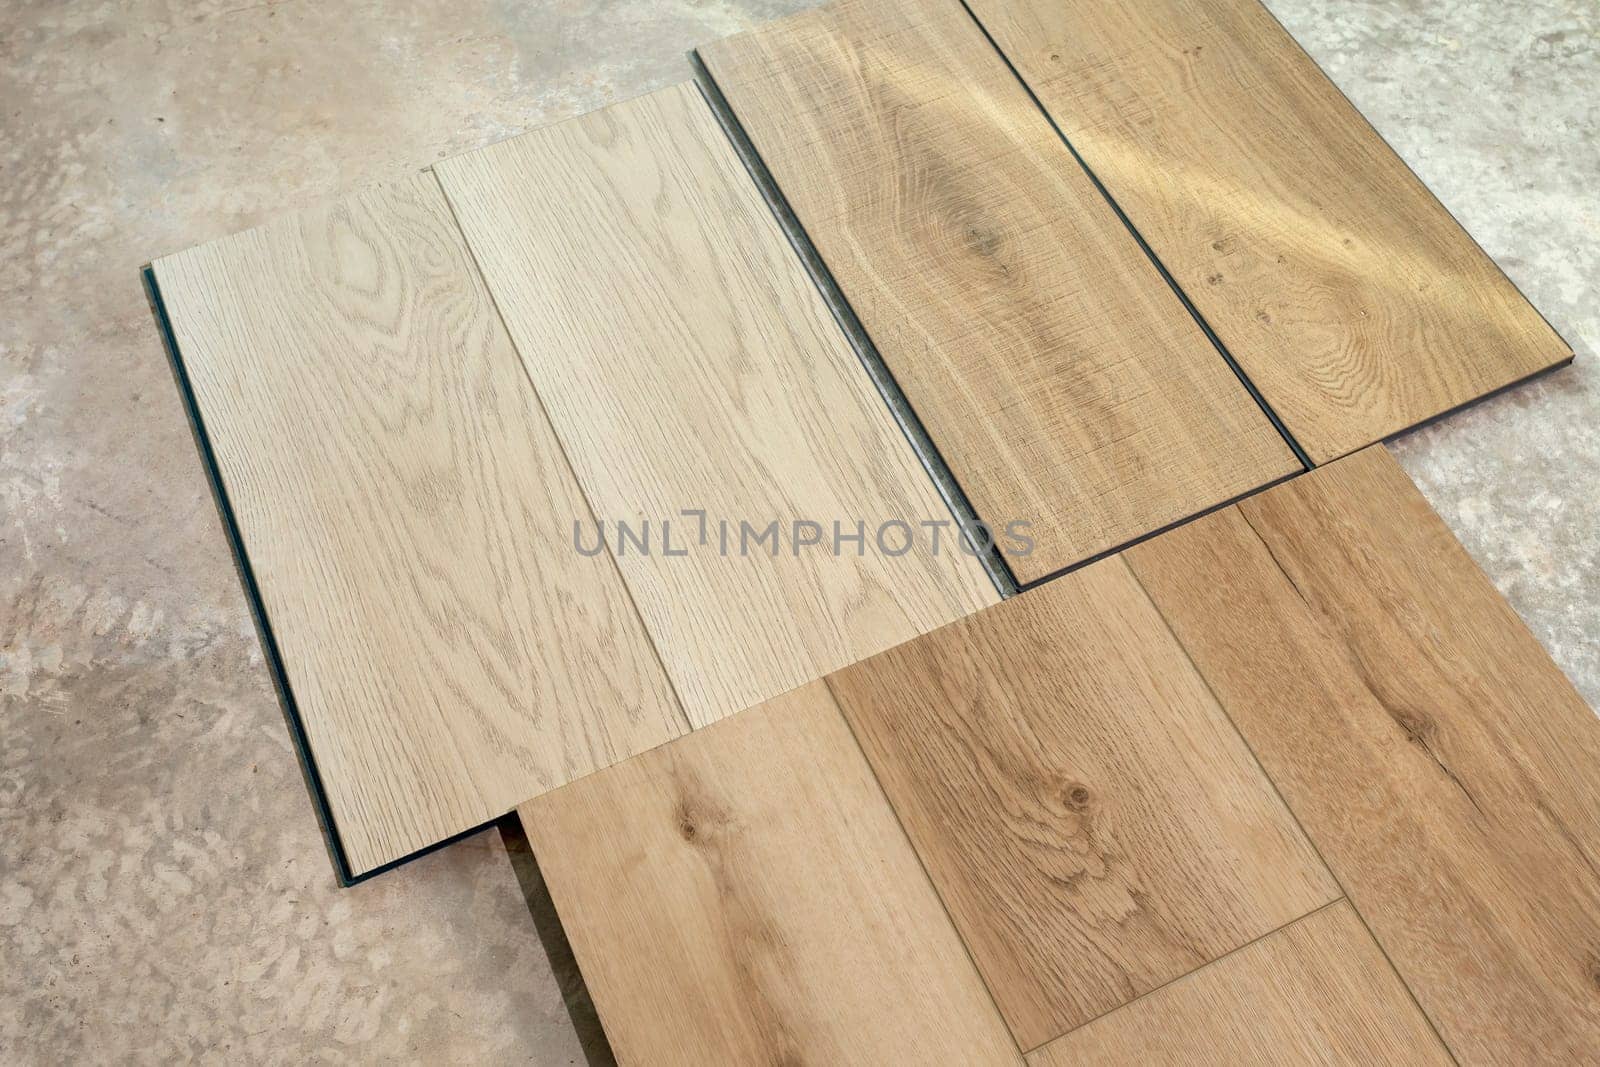 Top View Luxury Vinyl Wood Samples Lying On Concrete Floor In House. Choosing, Selecting Waterproof Flooring. Home Reconstruction. Vinyl Tiles Collection, Patterns. Interior Design Idea. Horizontal. by netatsi